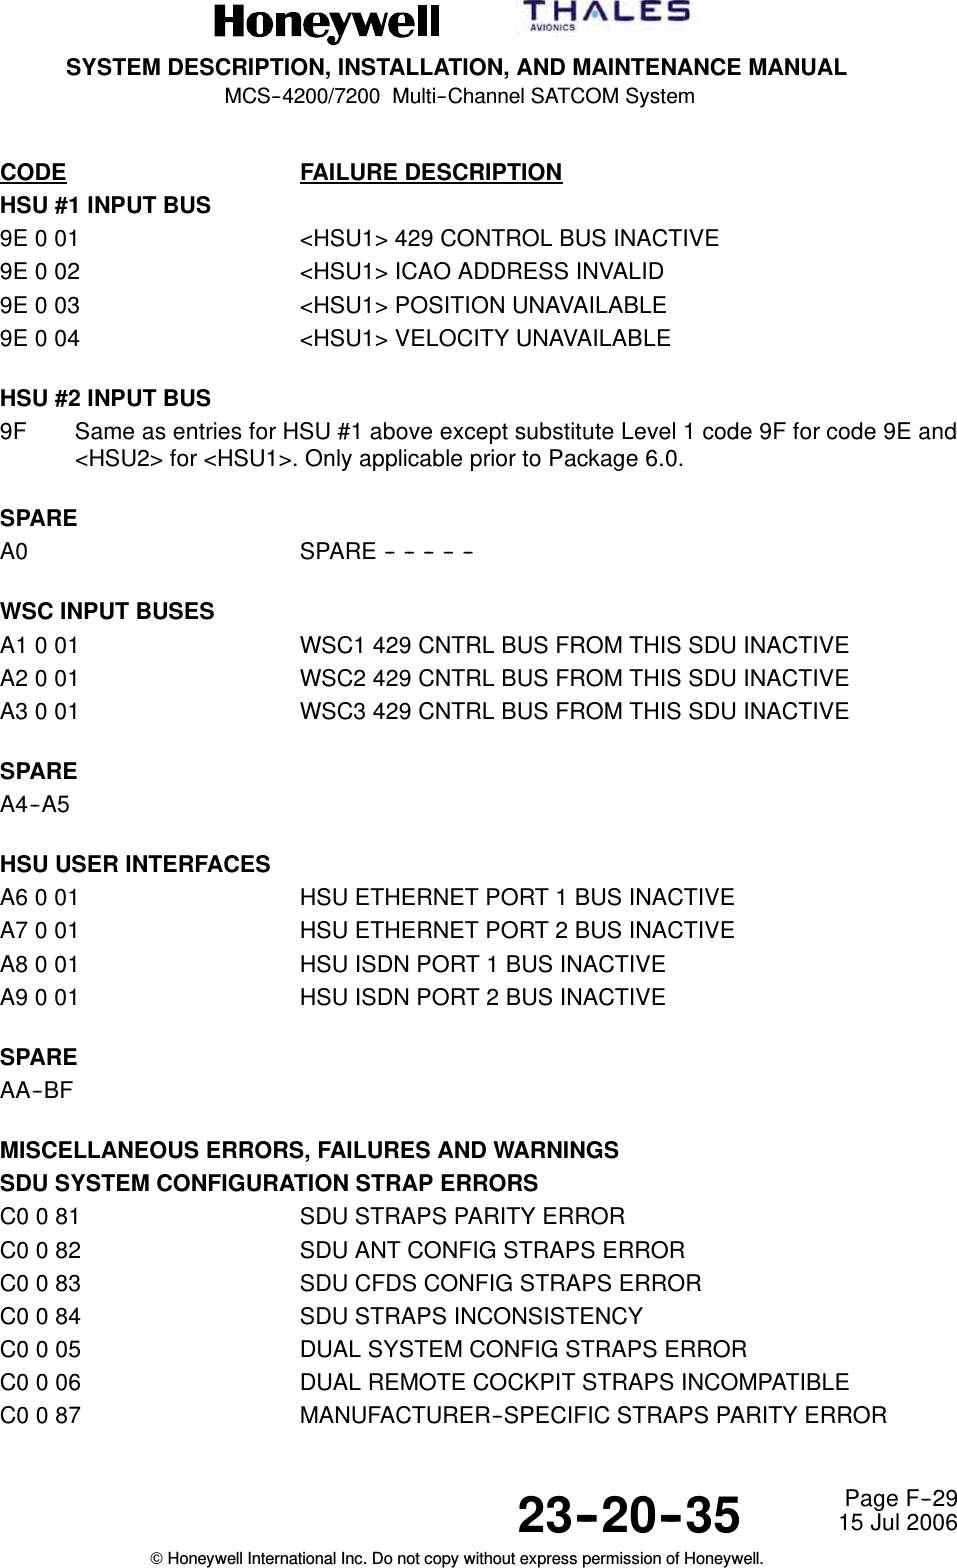 SYSTEM DESCRIPTION, INSTALLATION, AND MAINTENANCE MANUALMCS--4200/7200 Multi--Channel SATCOM System23--20--35 15 Jul 2006Honeywell International Inc. Do not copy without express permission of Honeywell.Page F--29CODE FAILURE DESCRIPTIONHSU #1 INPUT BUS9E 0 01 &lt;HSU1&gt; 429 CONTROL BUS INACTIVE9E 0 02 &lt;HSU1&gt; ICAO ADDRESS INVALID9E 0 03 &lt;HSU1&gt; POSITION UNAVAILABLE9E 0 04 &lt;HSU1&gt; VELOCITY UNAVAILABLEHSU #2 INPUT BUS9F Same as entries for HSU #1 above except substitute Level 1 code 9F for code 9E and&lt;HSU2&gt; for &lt;HSU1&gt;. Only applicable prior to Package 6.0.SPAREA0 SPARE----------WSC INPUT BUSESA1 0 01 WSC1 429 CNTRL BUS FROM THIS SDU INACTIVEA2 0 01 WSC2 429 CNTRL BUS FROM THIS SDU INACTIVEA3 0 01 WSC3 429 CNTRL BUS FROM THIS SDU INACTIVESPAREA4--A5HSU USER INTERFACESA6 0 01 HSU ETHERNET PORT 1 BUS INACTIVEA7 0 01 HSU ETHERNET PORT 2 BUS INACTIVEA8 0 01 HSU ISDN PORT 1 BUS INACTIVEA9 0 01 HSU ISDN PORT 2 BUS INACTIVESPAREAA--BFMISCELLANEOUS ERRORS, FAILURES AND WARNINGSSDU SYSTEM CONFIGURATION STRAP ERRORSC0 0 81 SDU STRAPS PARITY ERRORC0 0 82 SDU ANT CONFIG STRAPS ERRORC0 0 83 SDU CFDS CONFIG STRAPS ERRORC0 0 84 SDU STRAPS INCONSISTENCYC0 0 05 DUAL SYSTEM CONFIG STRAPS ERRORC0 0 06 DUAL REMOTE COCKPIT STRAPS INCOMPATIBLEC0 0 87 MANUFACTURER--SPECIFIC STRAPS PARITY ERROR